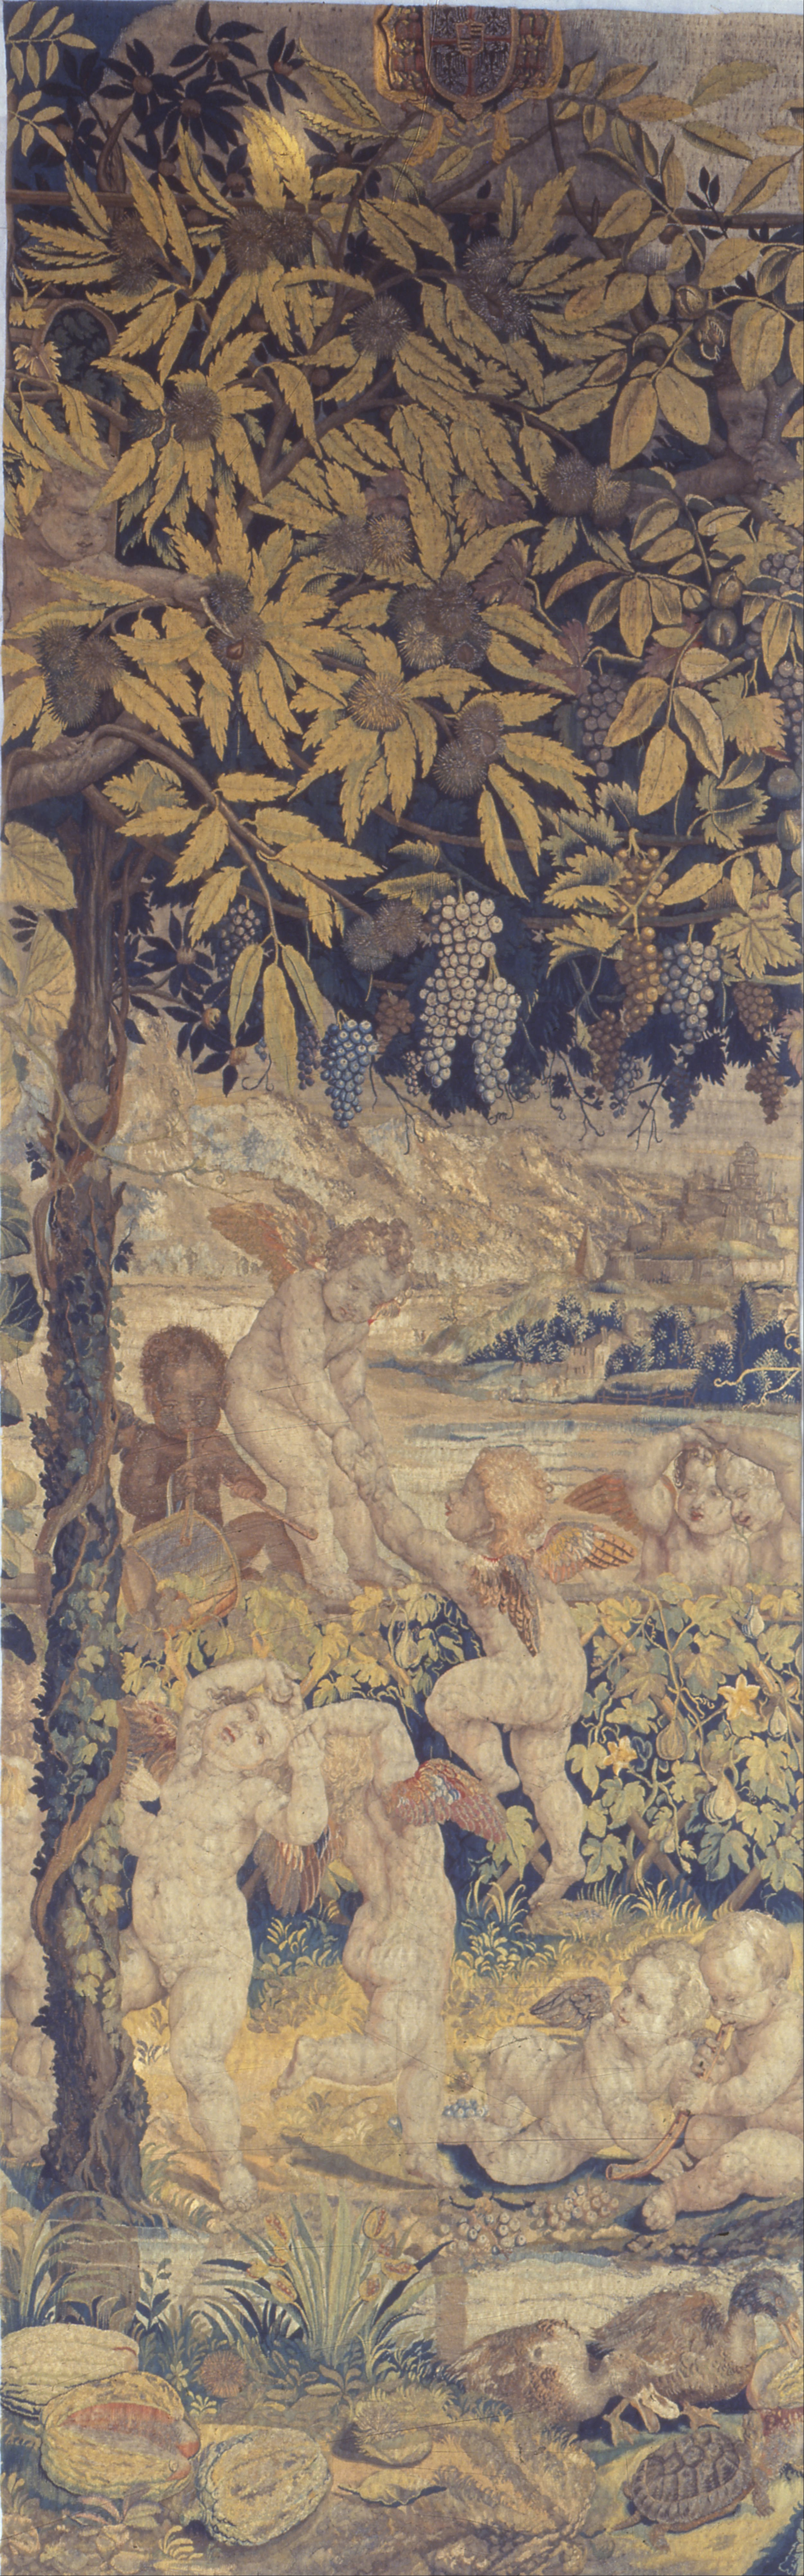 Gobelin játszó puttókkal by Giulio Romano - 1540 - 1545 - 107 x 341 cm 